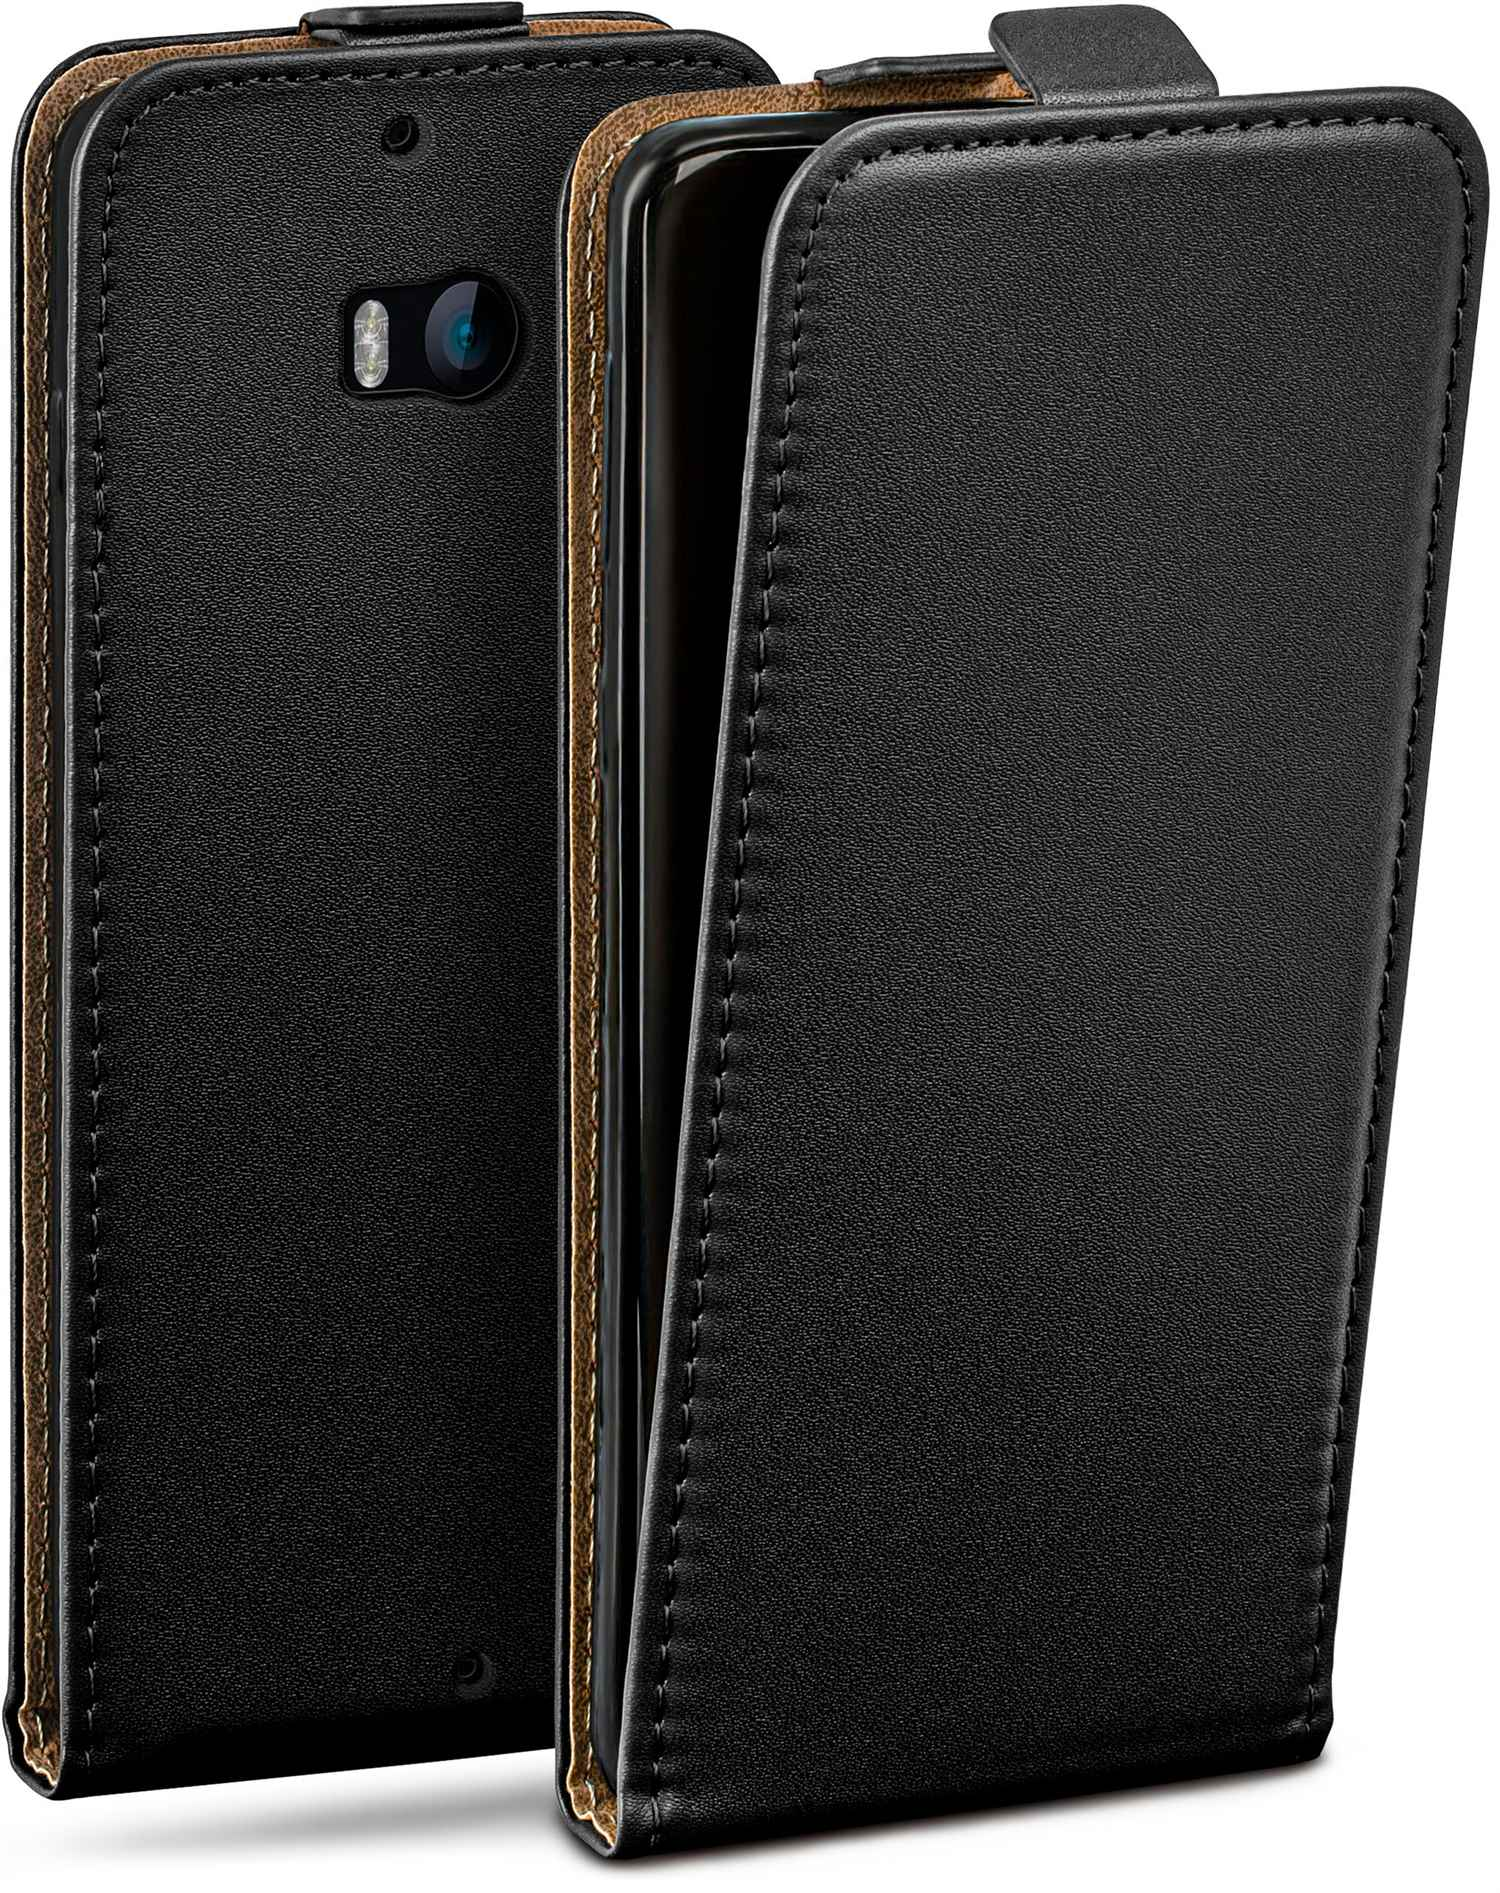 Case, Cover, Deep-Black Flip MOEX Nokia, Lumia Flip 930,